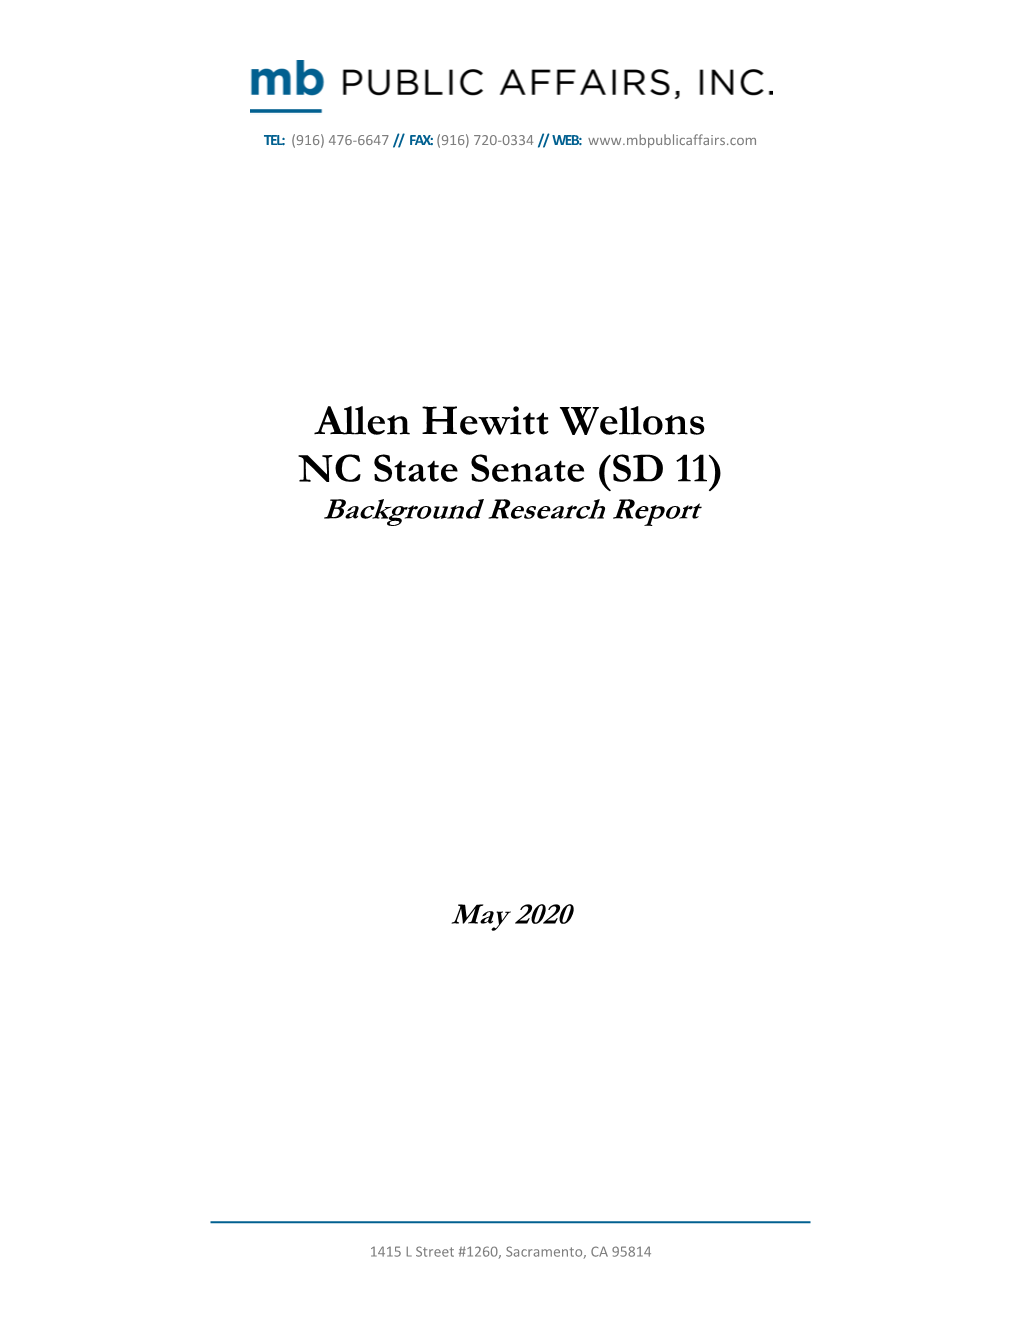 Allen Hewitt Wellons NC State Senate (SD 11) Background Research Report